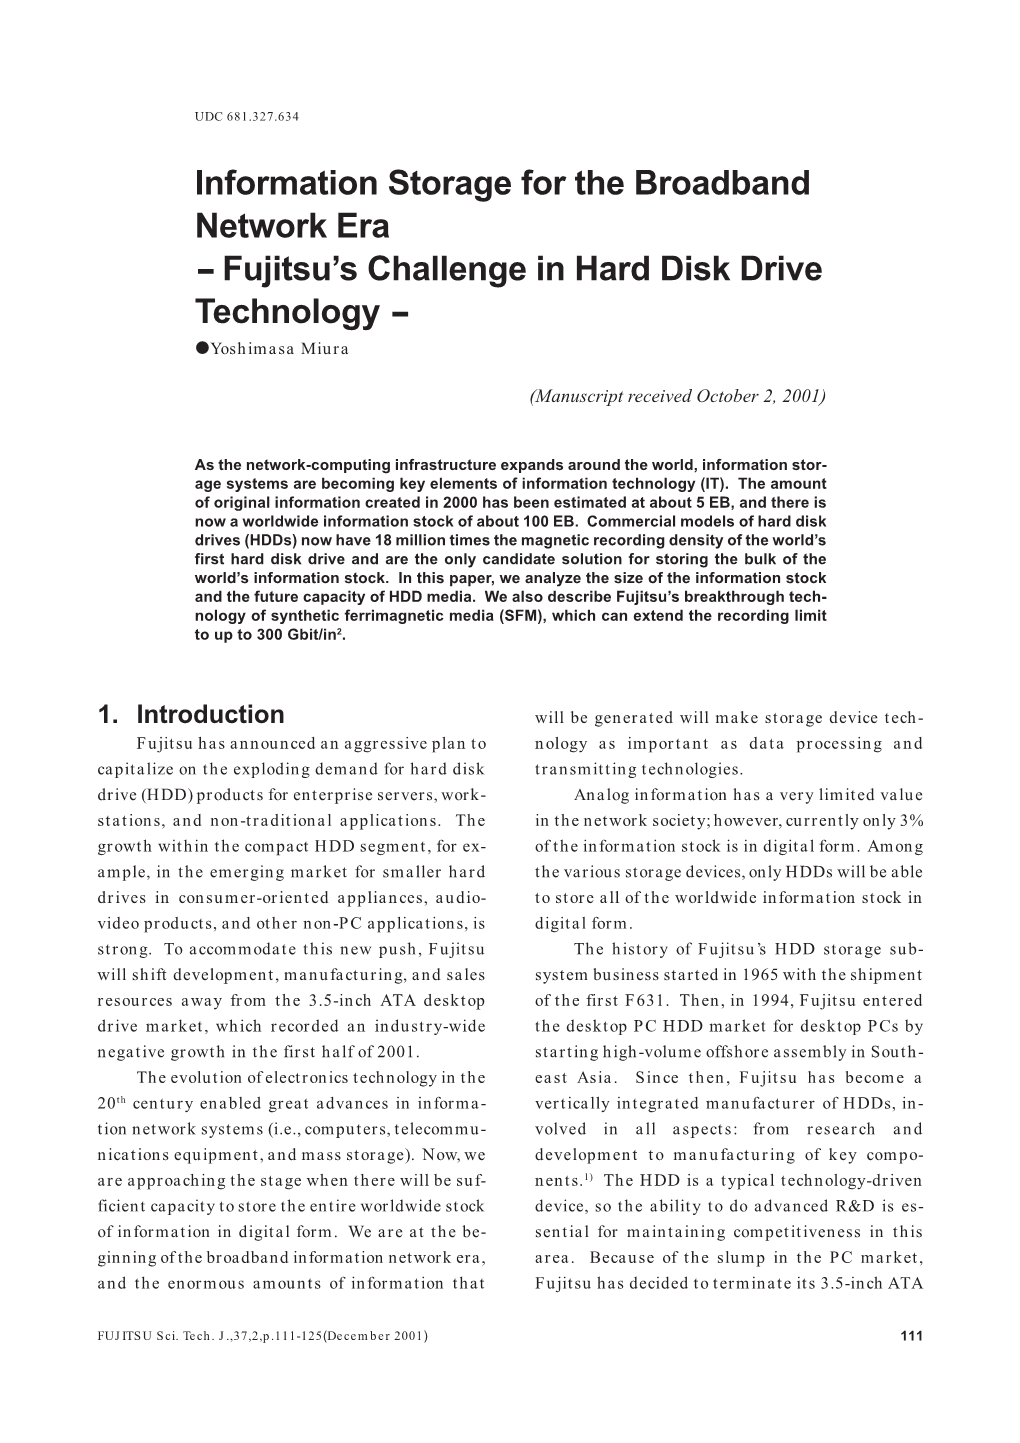 Information Storage for the Broadband Network Era - Fujitsu’S Challenge in Hard Disk Drive Technology - Vyoshimasa Miura